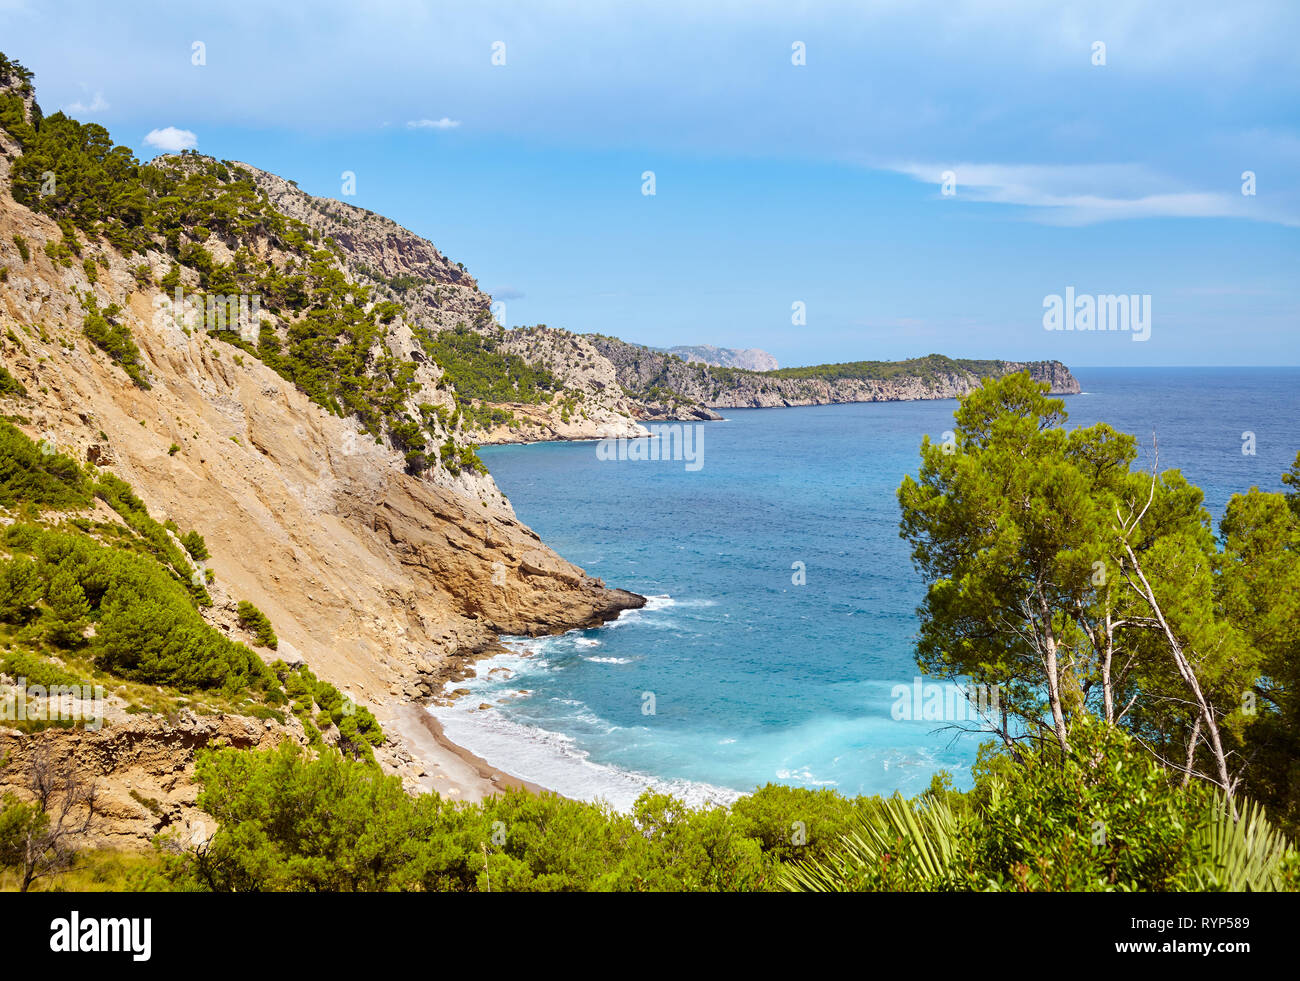 Scenic mountainous landscape with Coll Baix beach on Mallorca, Spain. Stock Photo